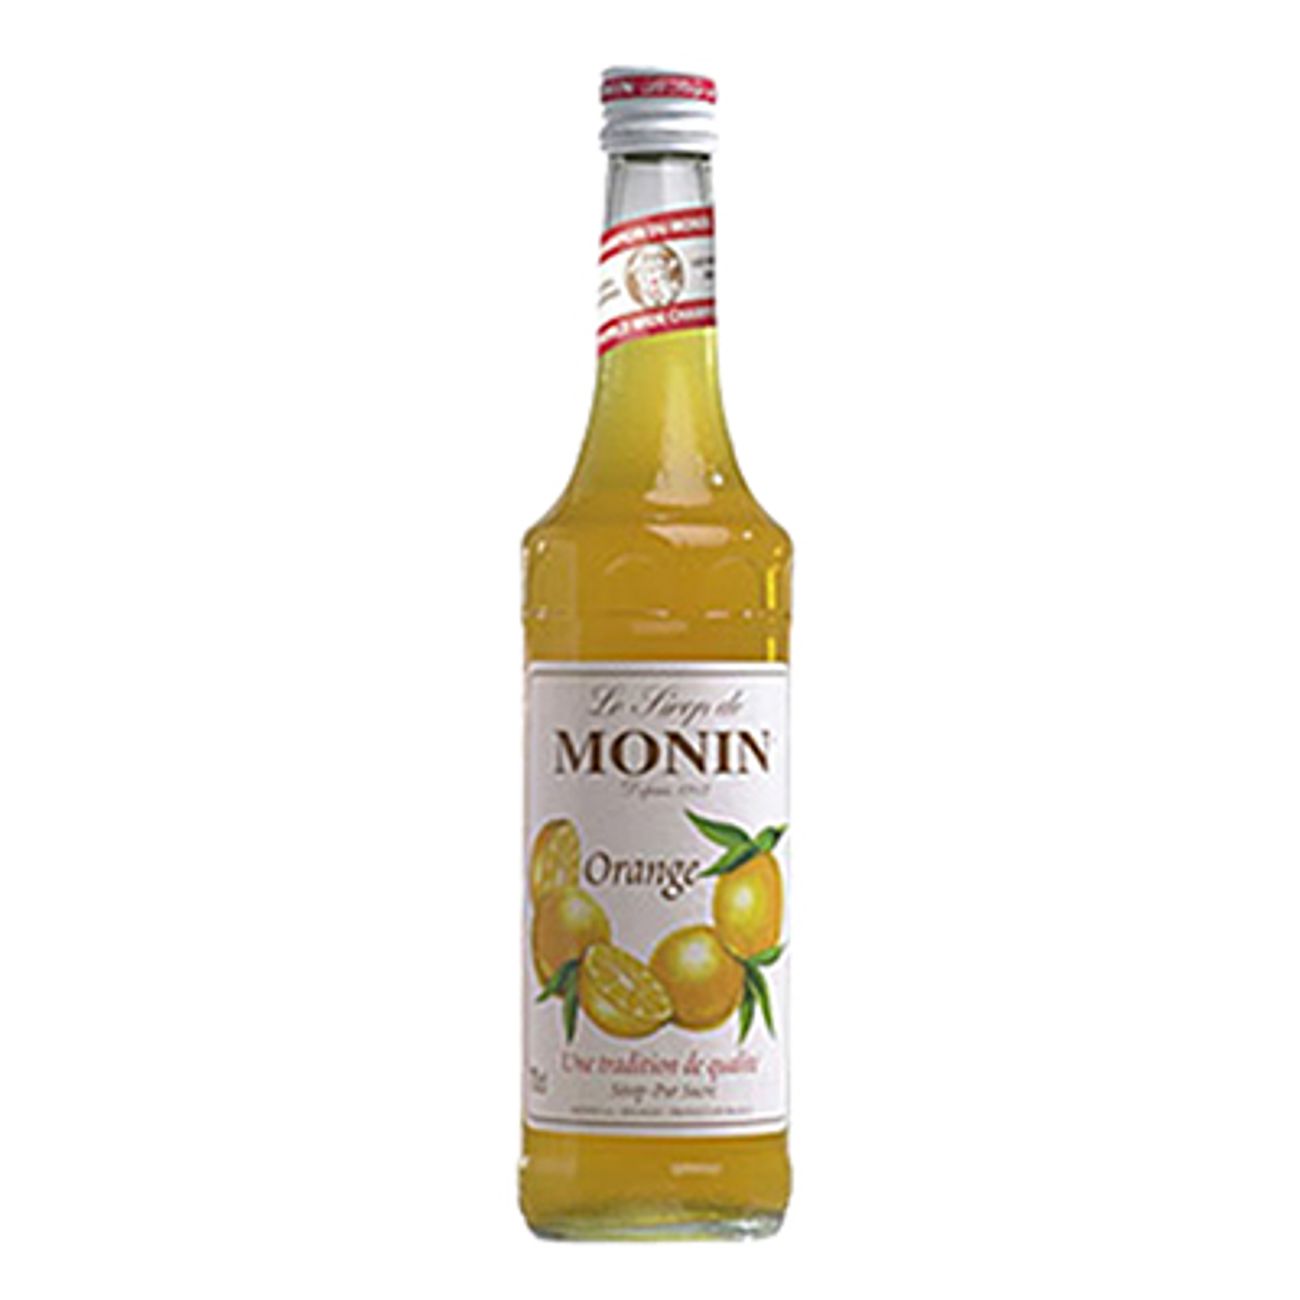 monin-apelsin-drinkmix-1